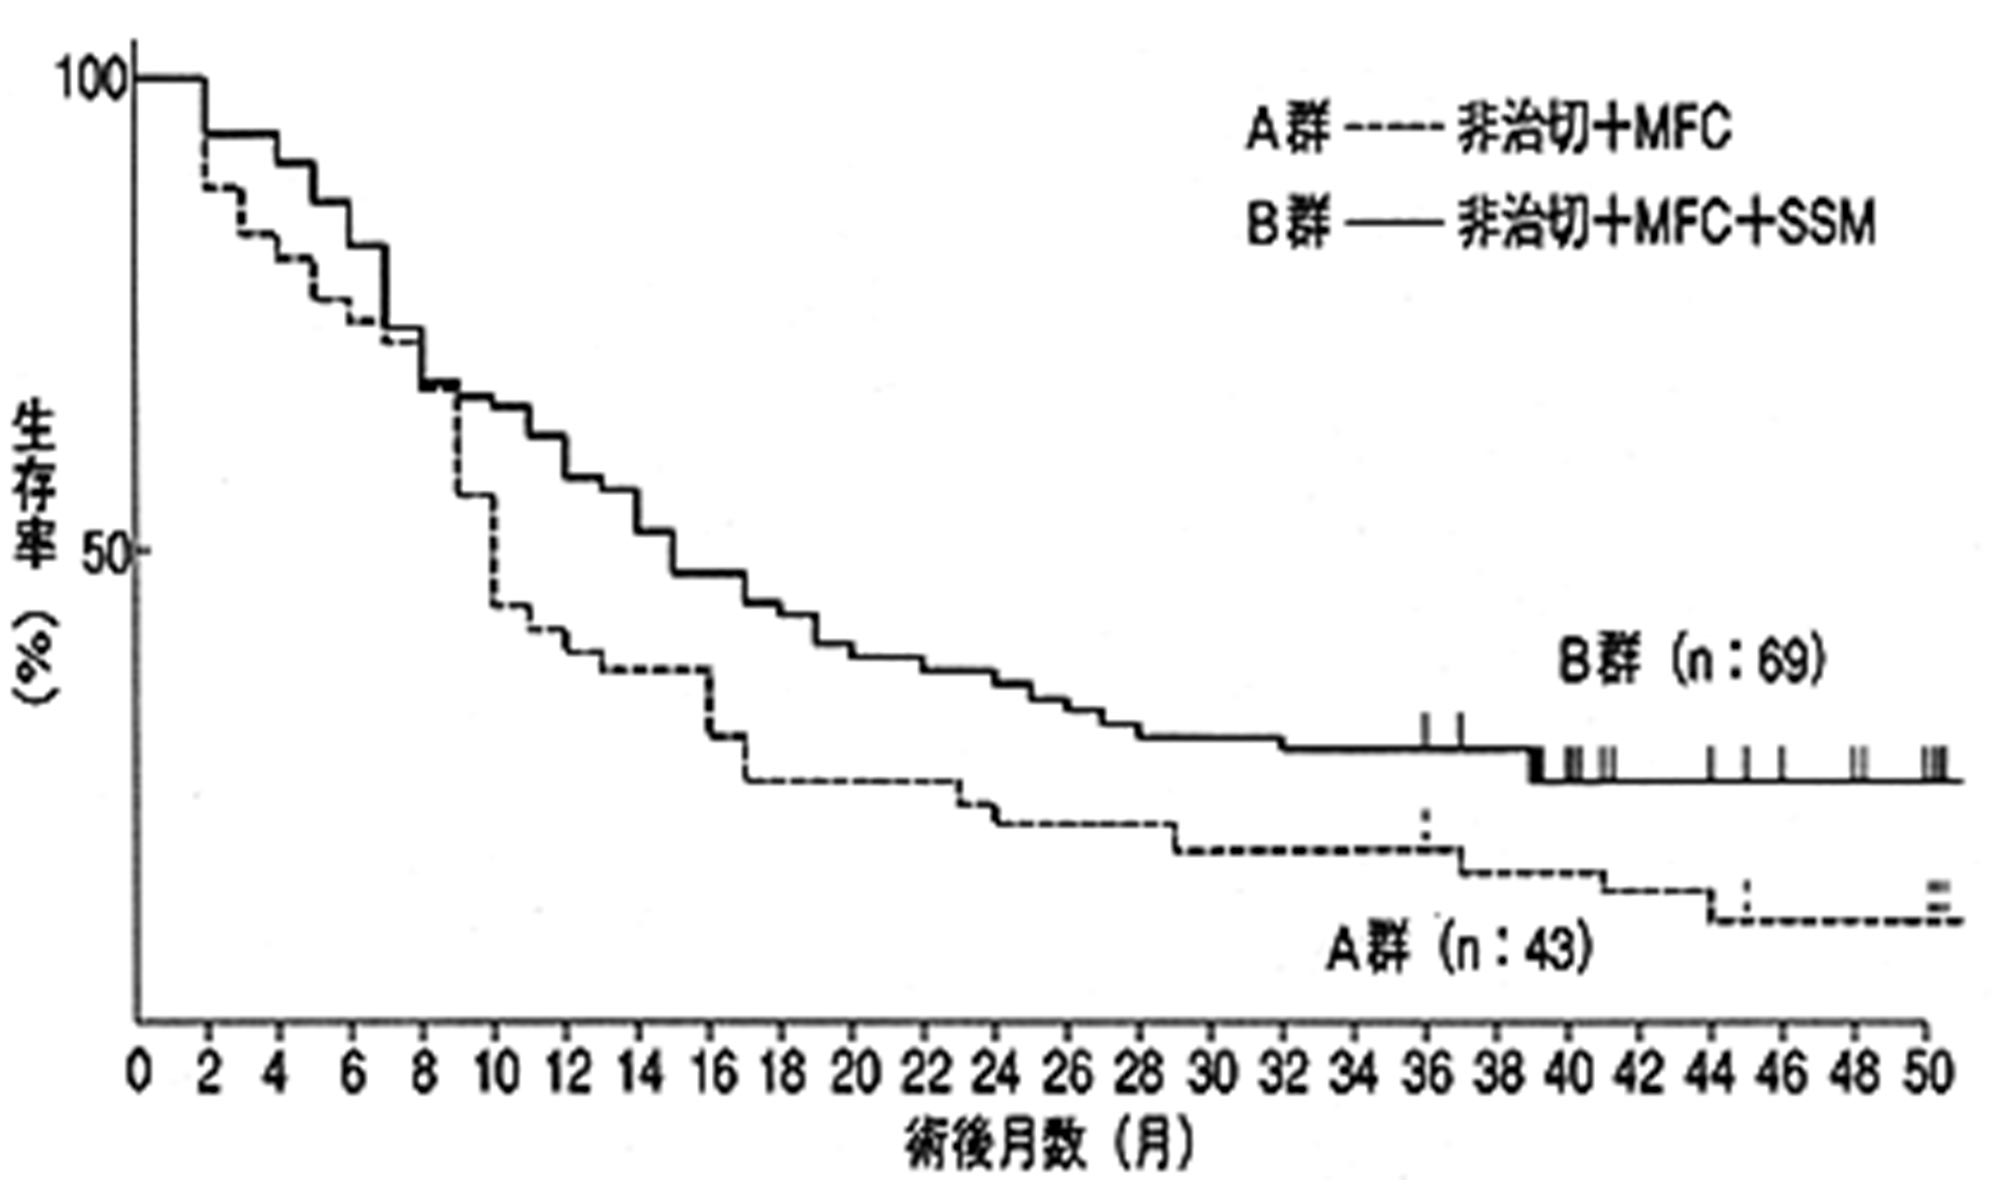 胃ガン非治癒切除症例の生存曲線（Kaplan-Meier法）-解析II-